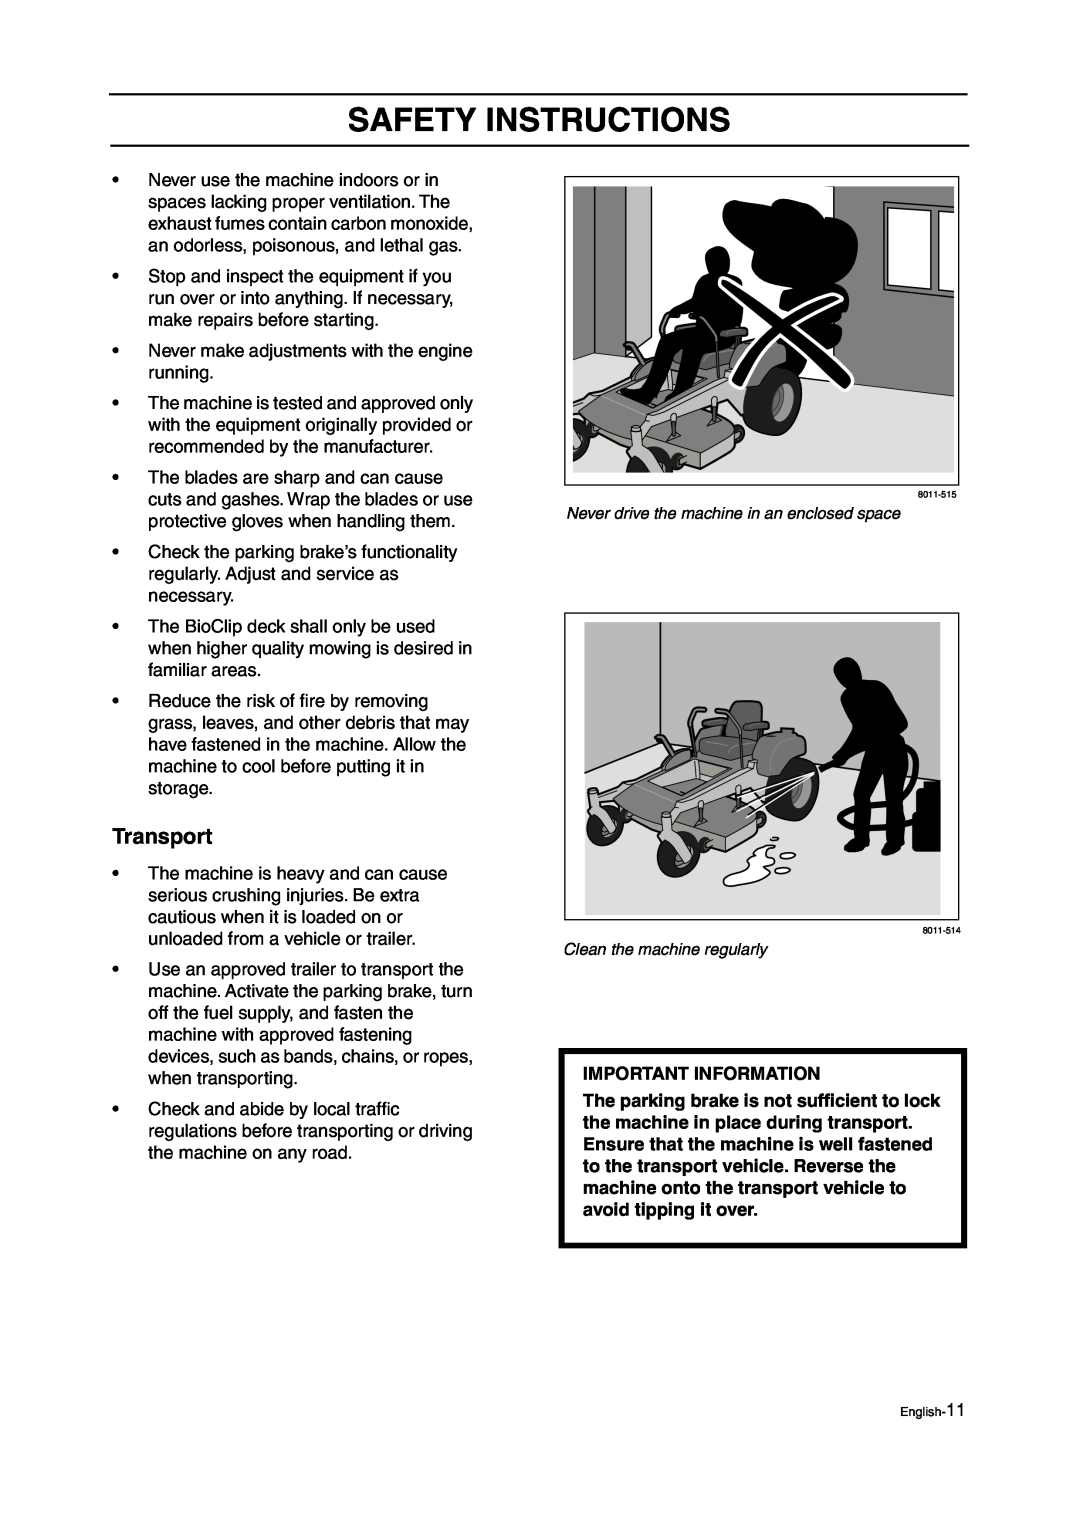 Husqvarna ZTH manual Transport, Important Information, Safety Instructions 